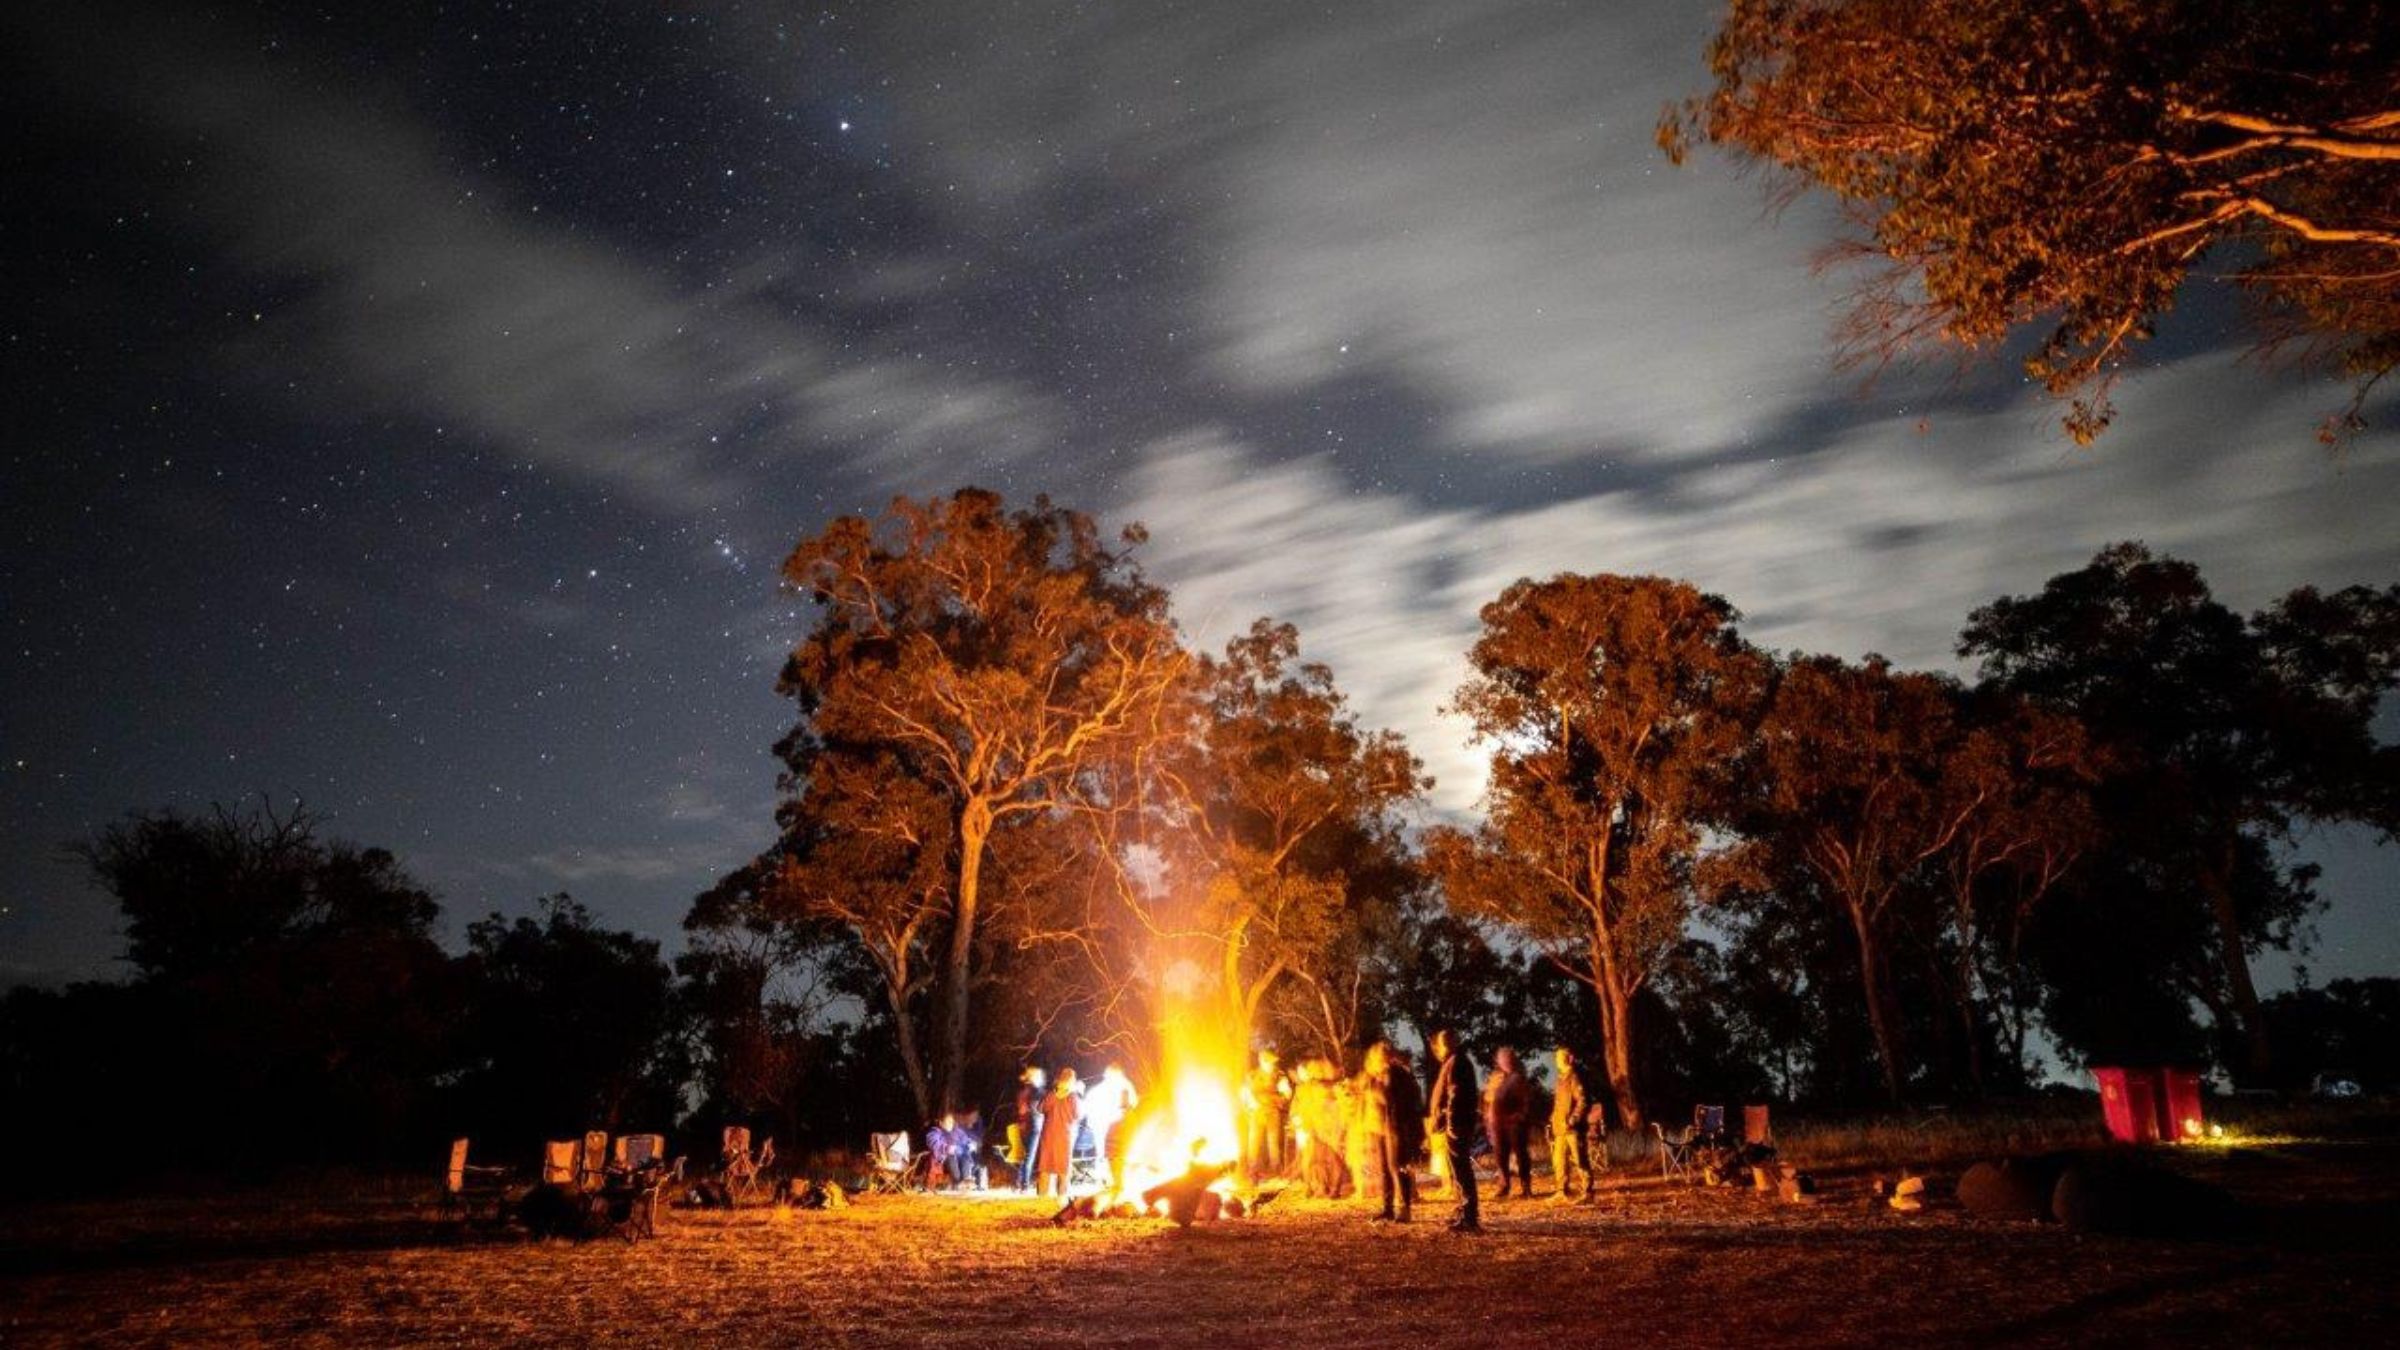 Stargazing & Aboriginal Astronomy | 23rd September